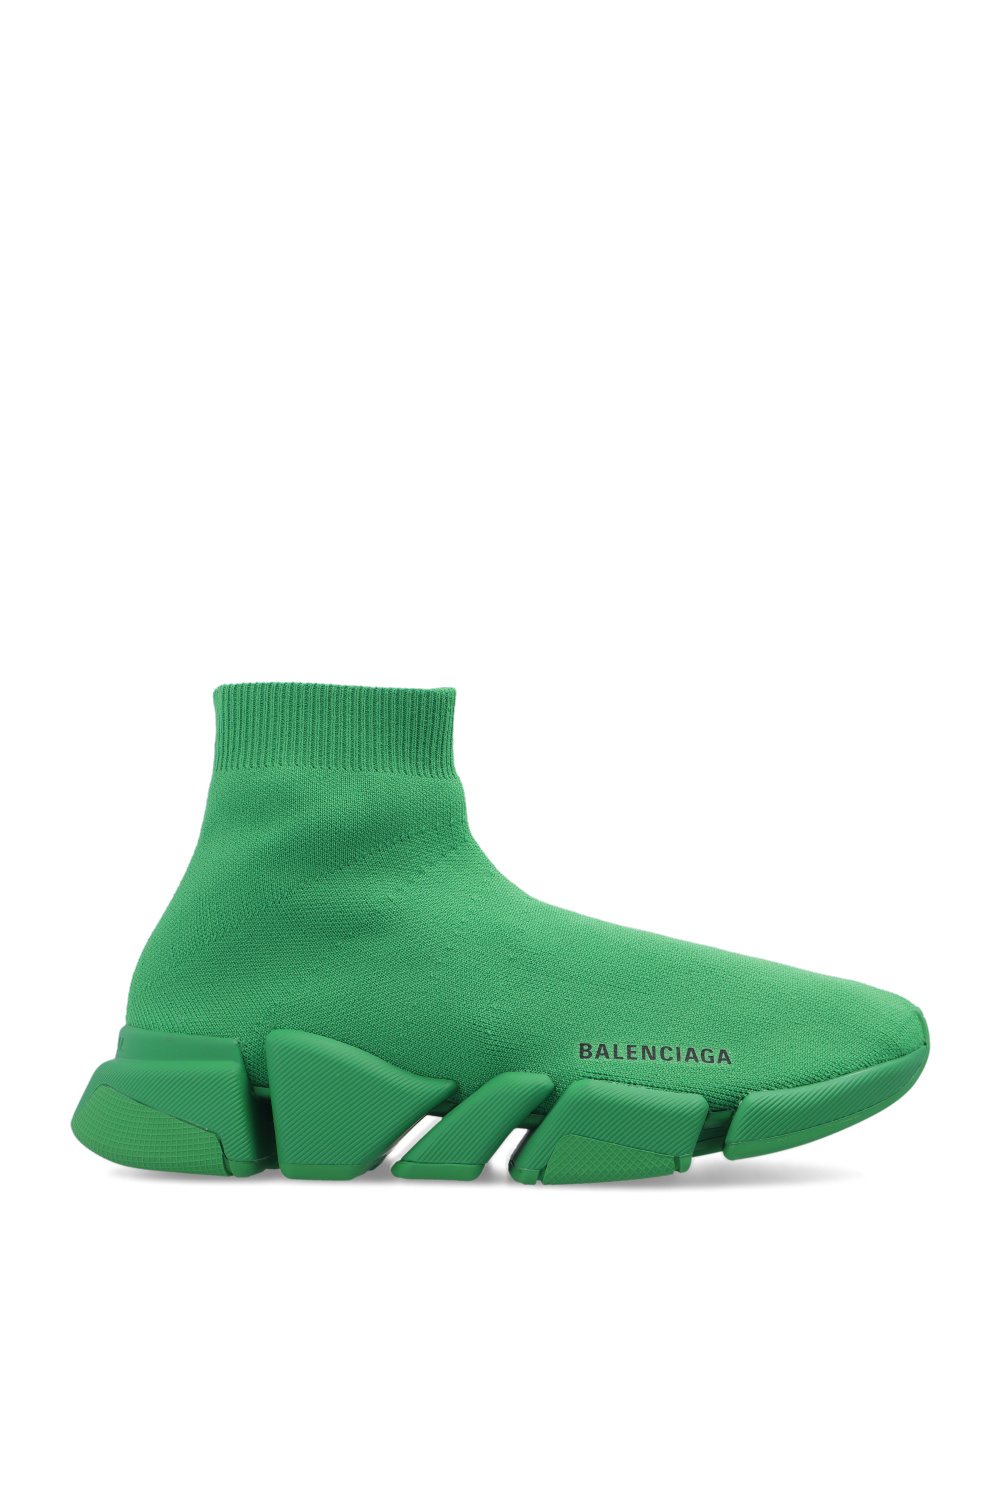 IetpShops adidas terrex socks AS - Adidas Terrex Swift Solo Approach Shoes Core Black